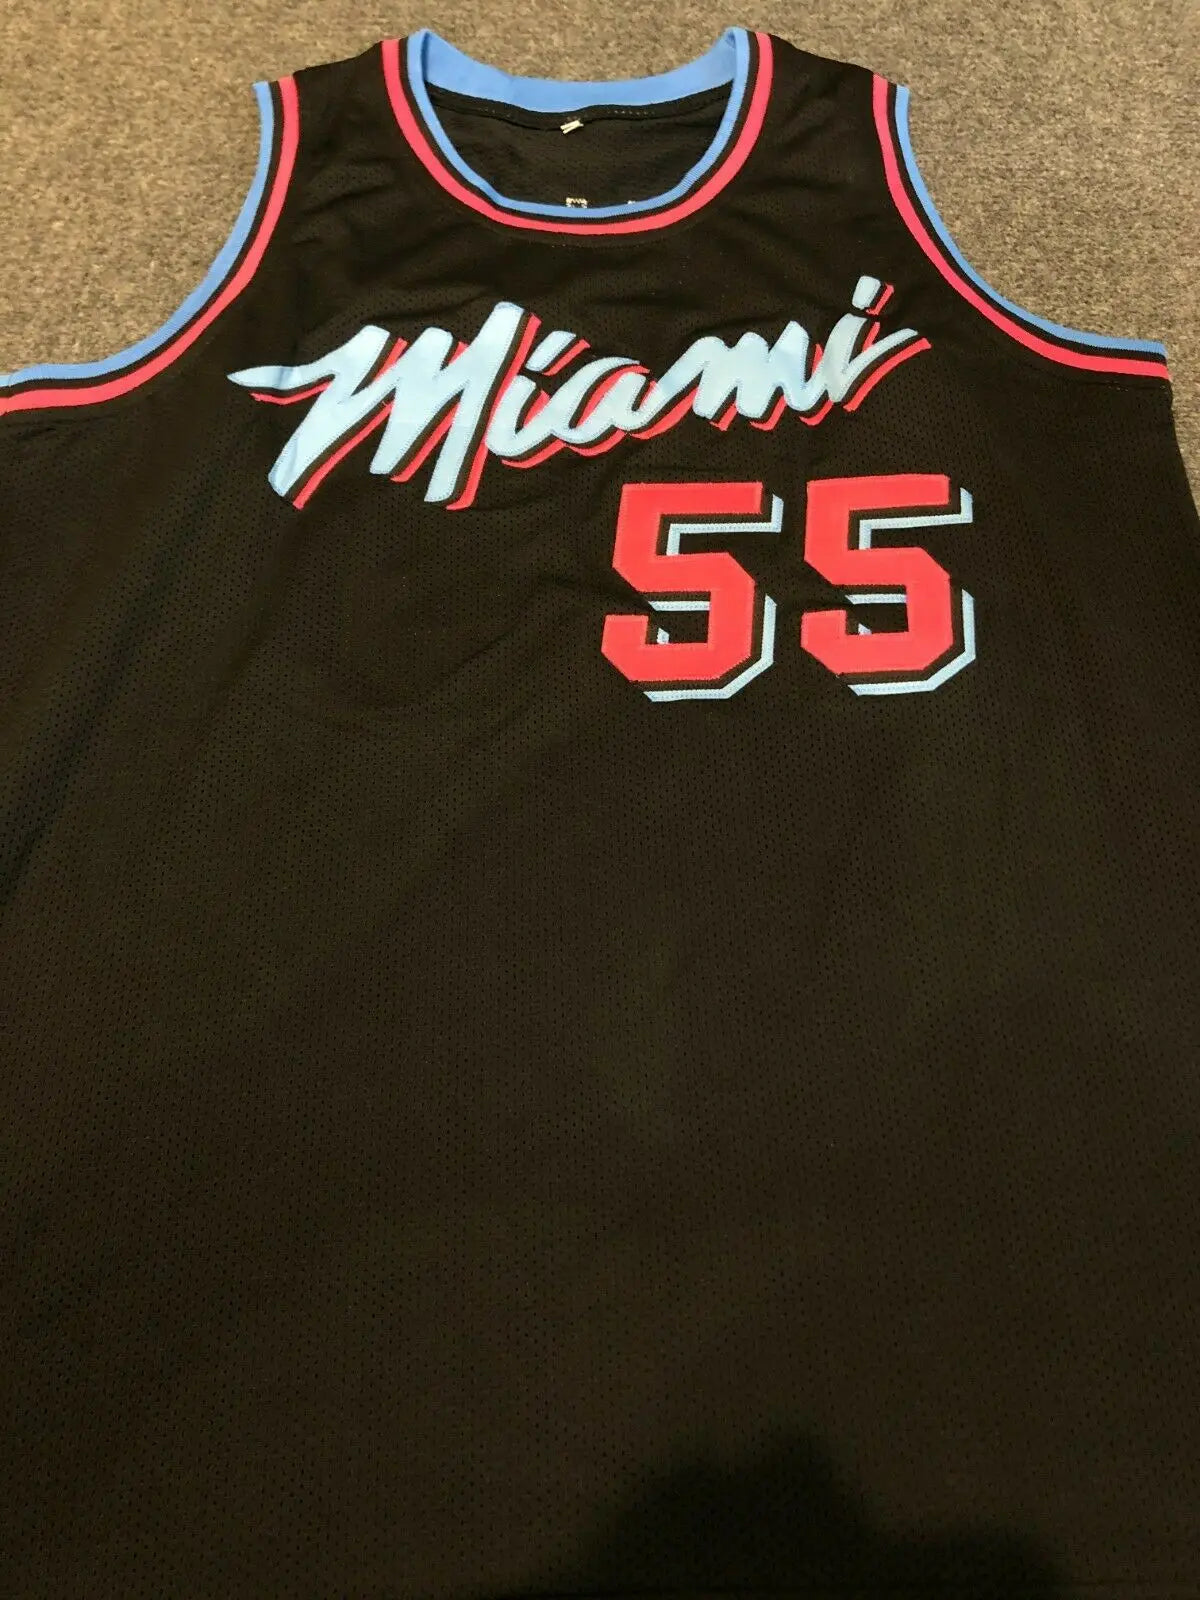 Miami Heat Jason Williams Autographed Signed Miami Vice Jersey Psa